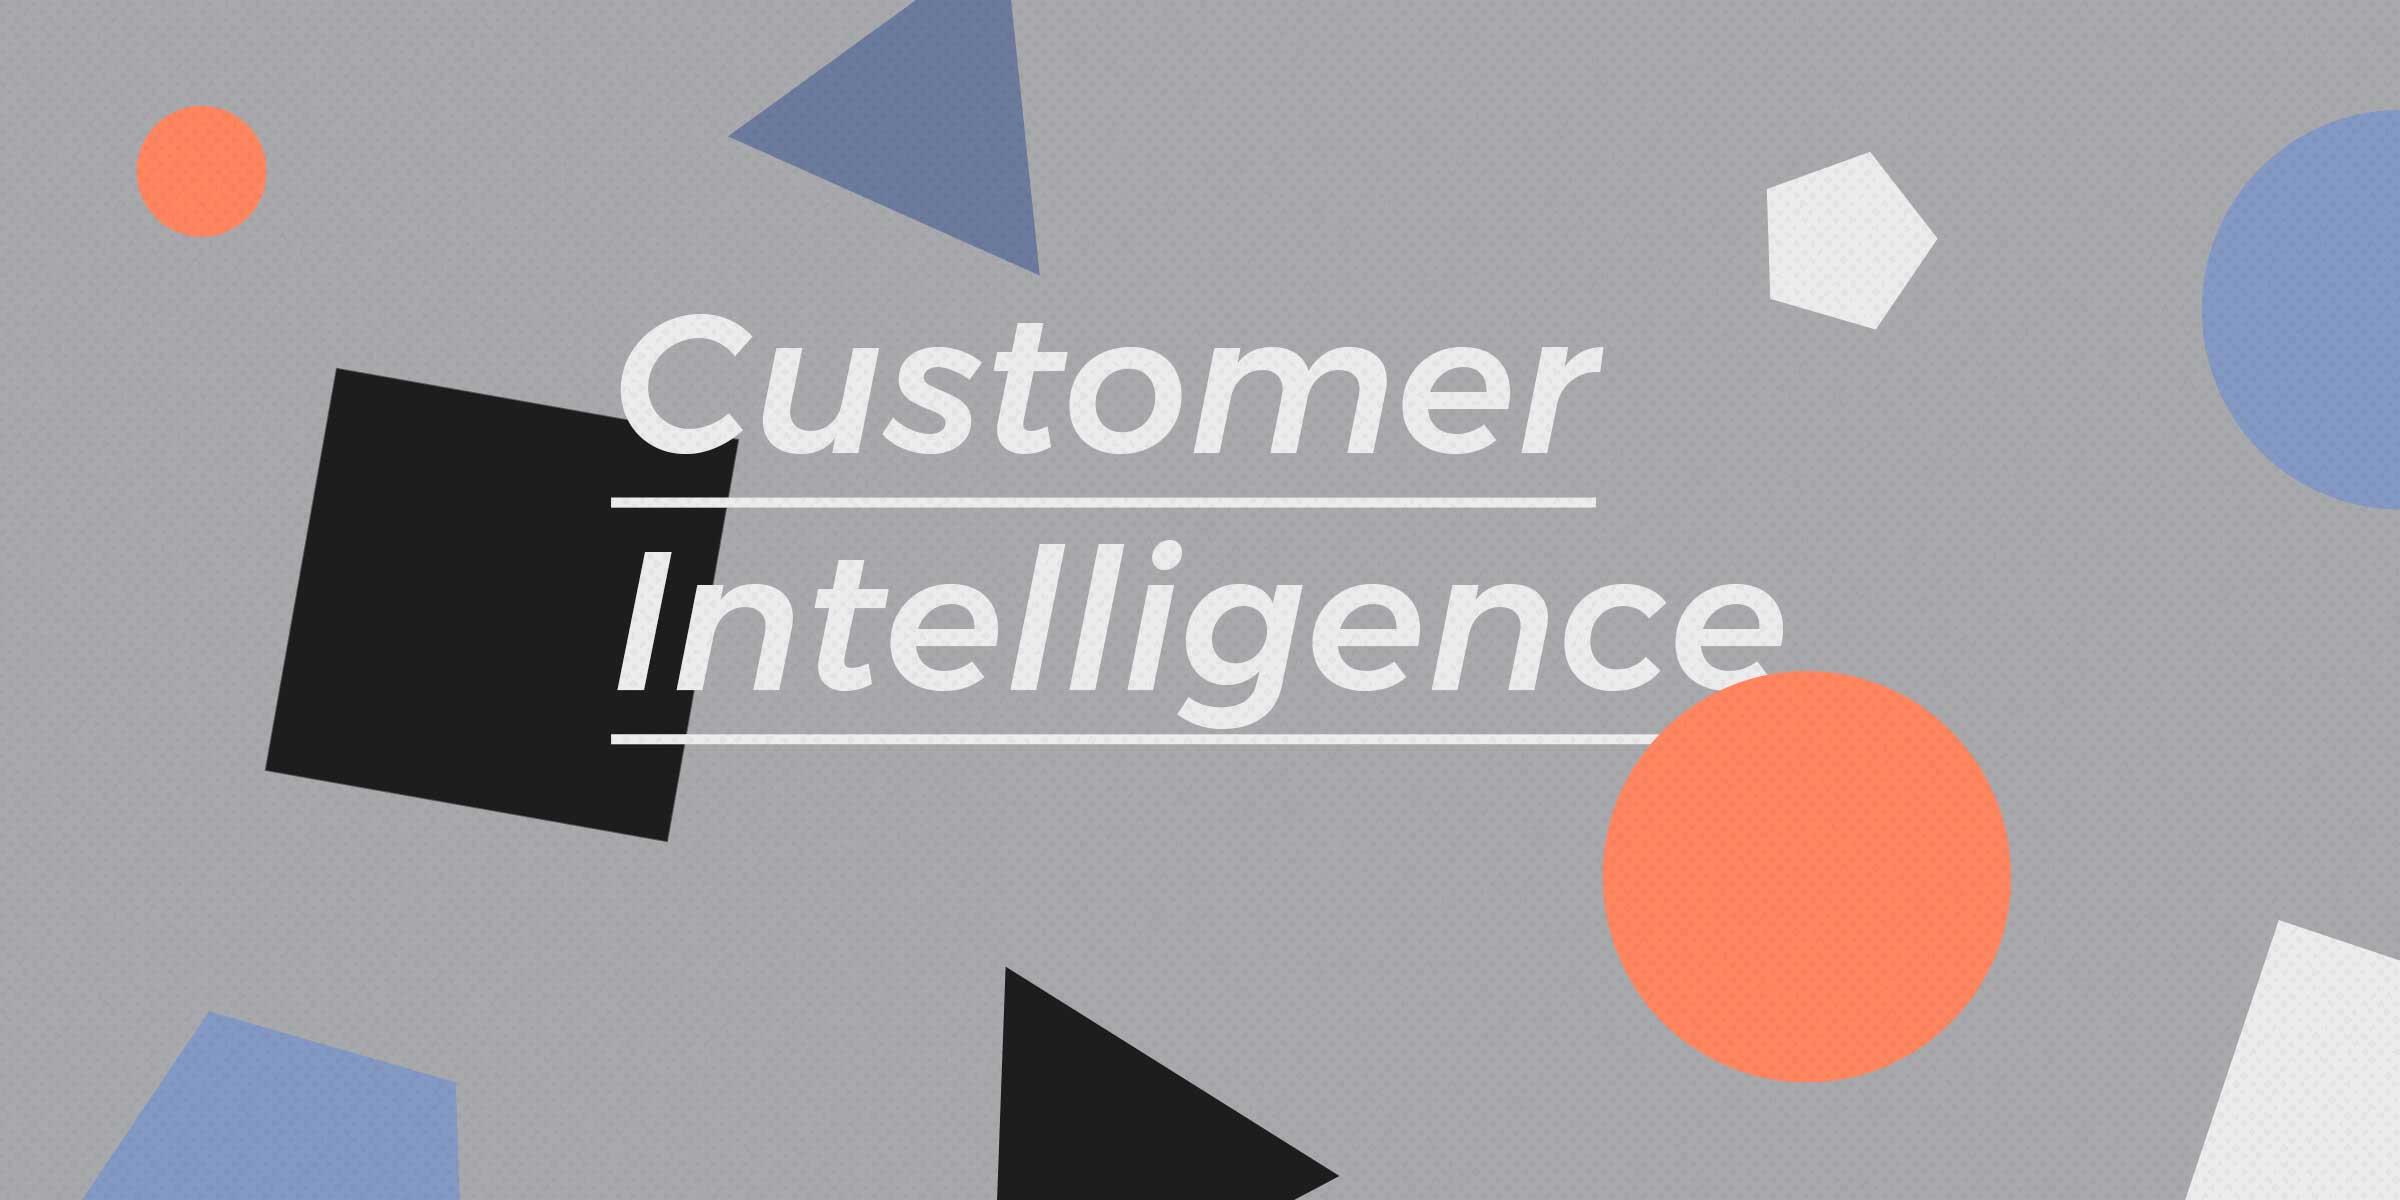 Smart CRM Basics: Why Customer Intelligence?